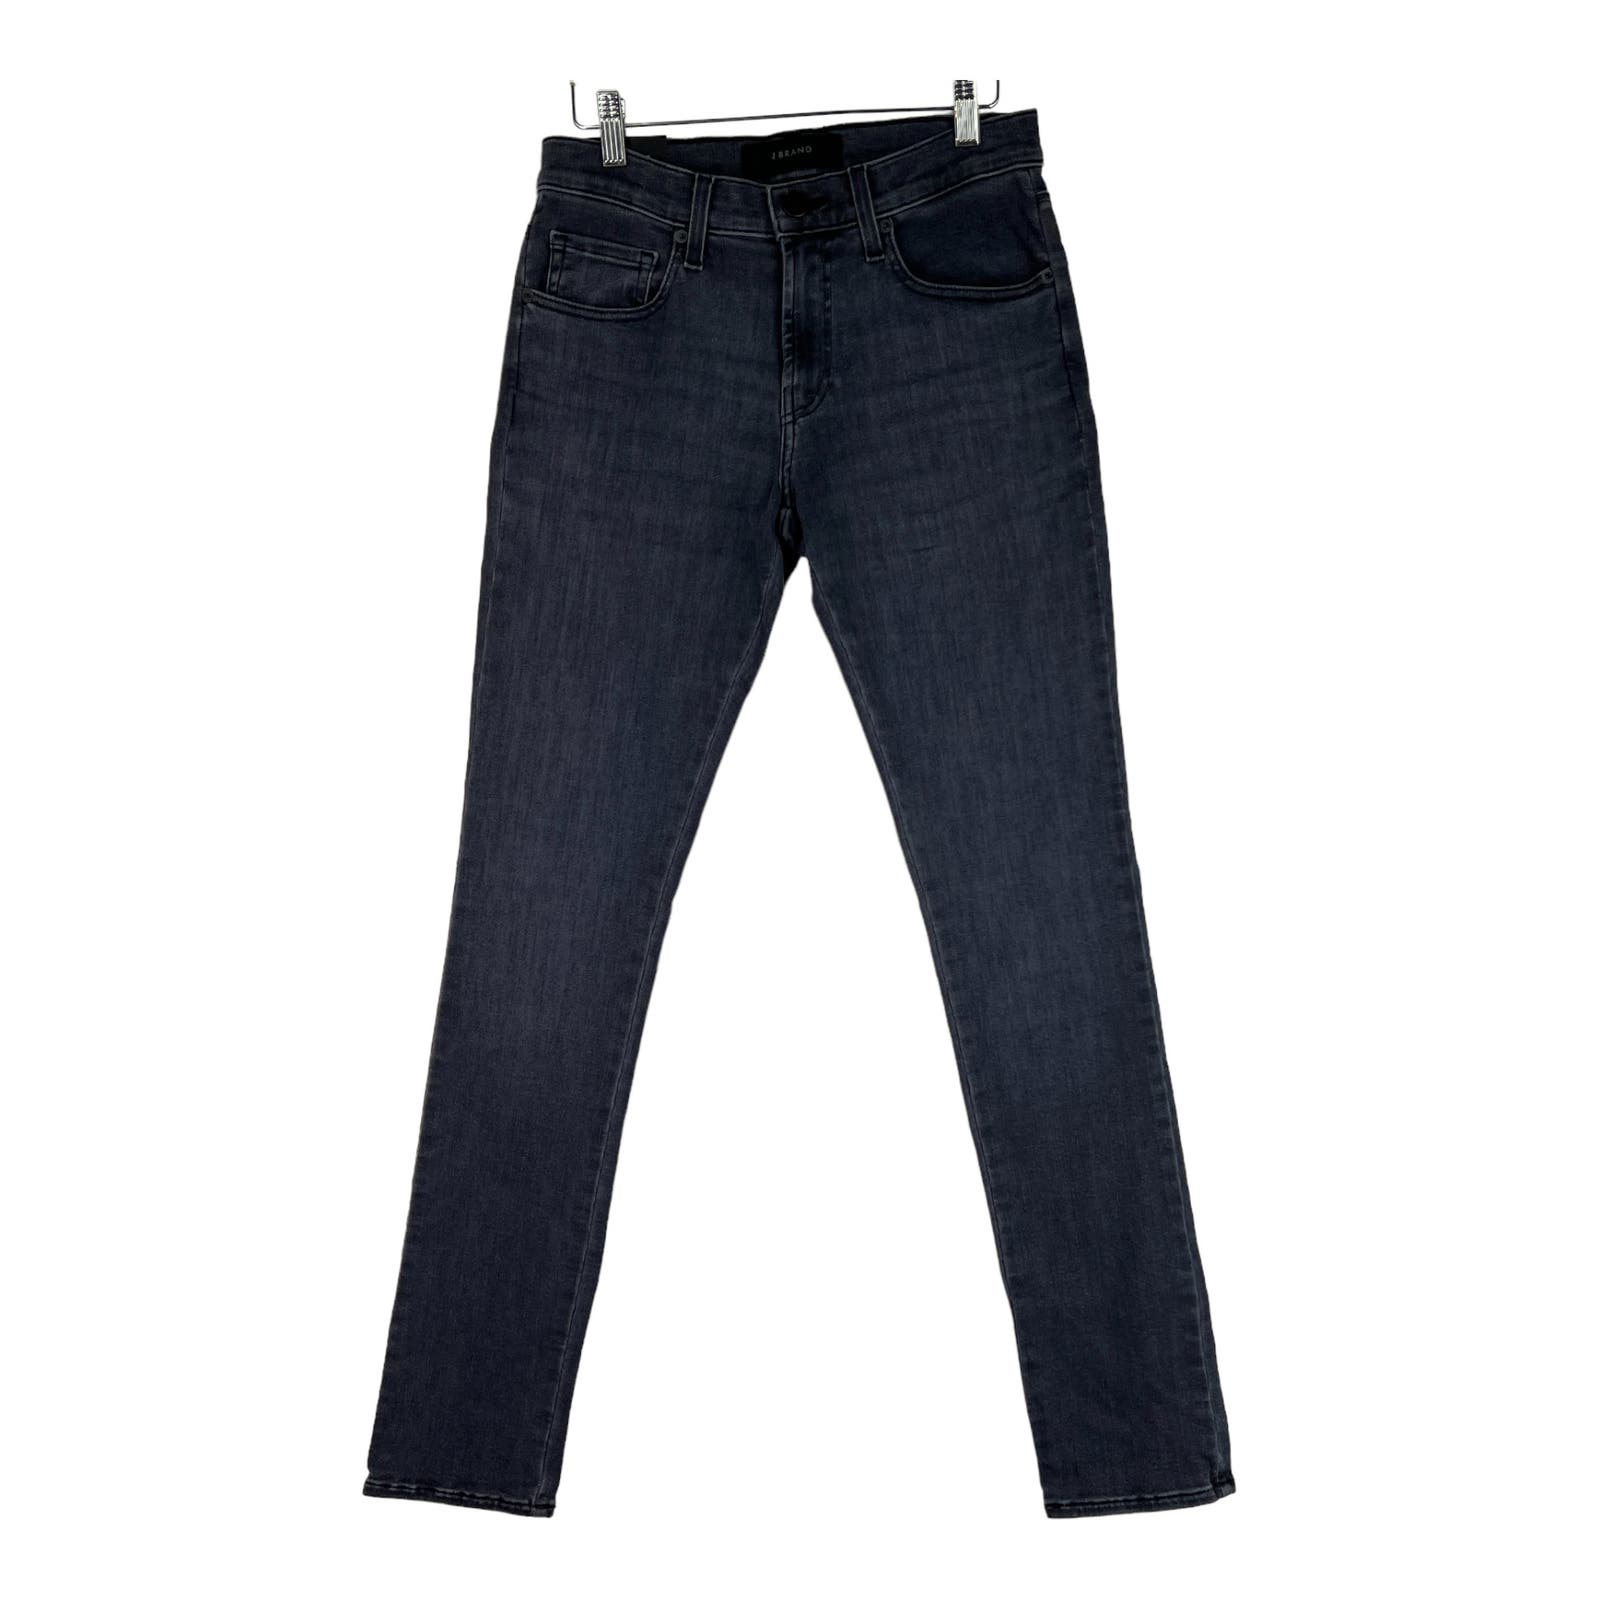 J Brand Women Grey Charcoal Slim Jeans US 28 Skinny Fit